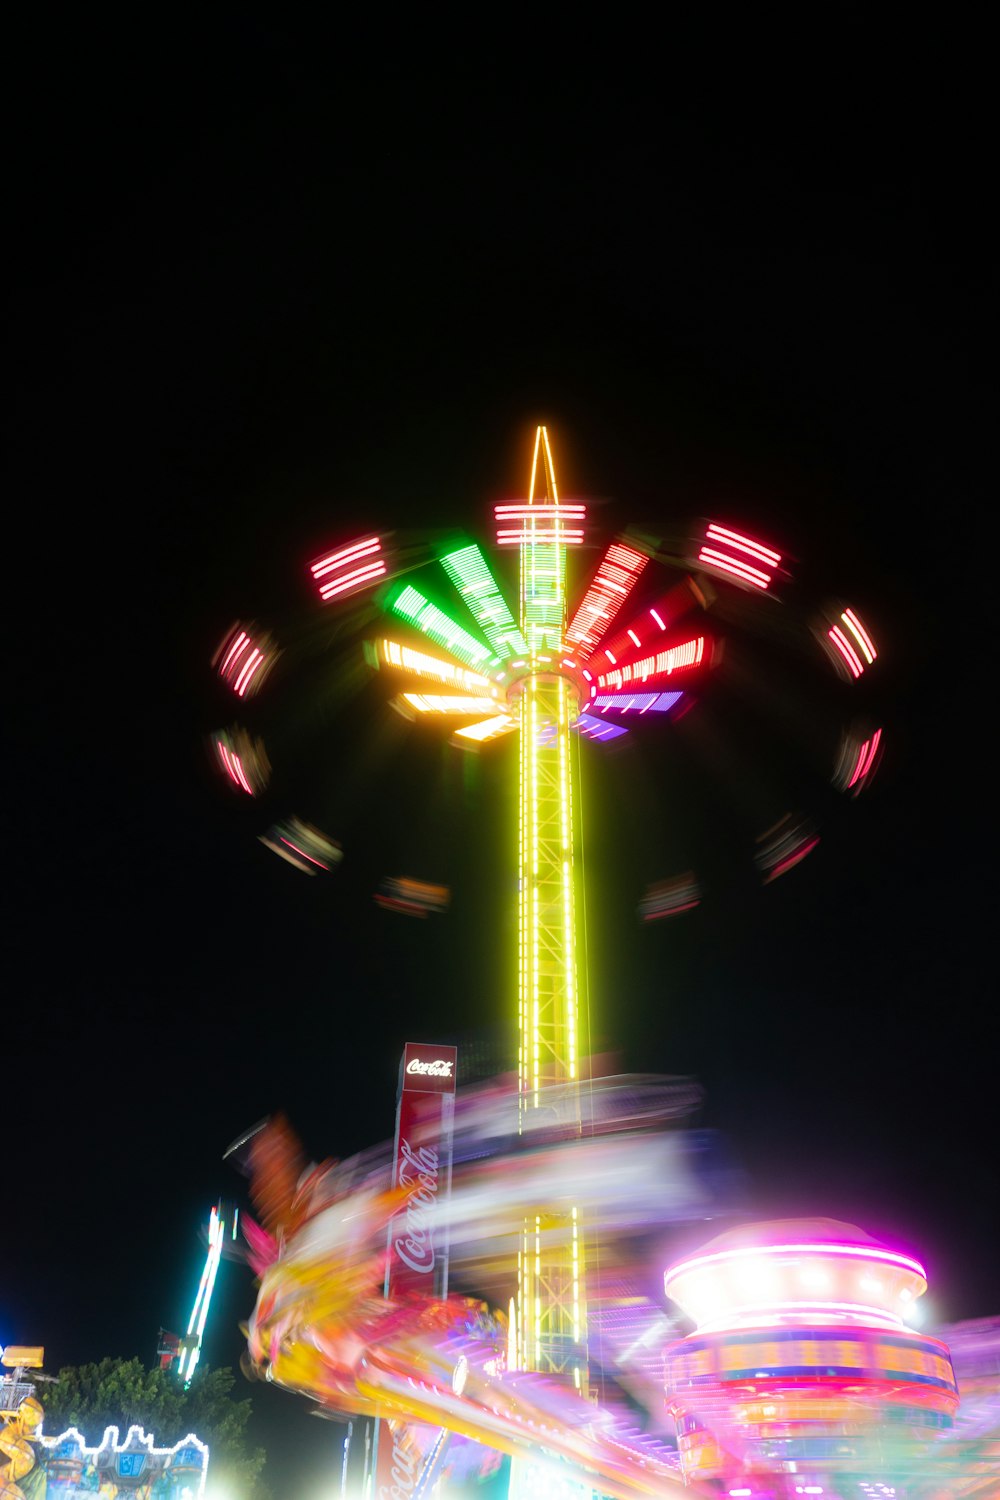 a large colorful ferris wheel